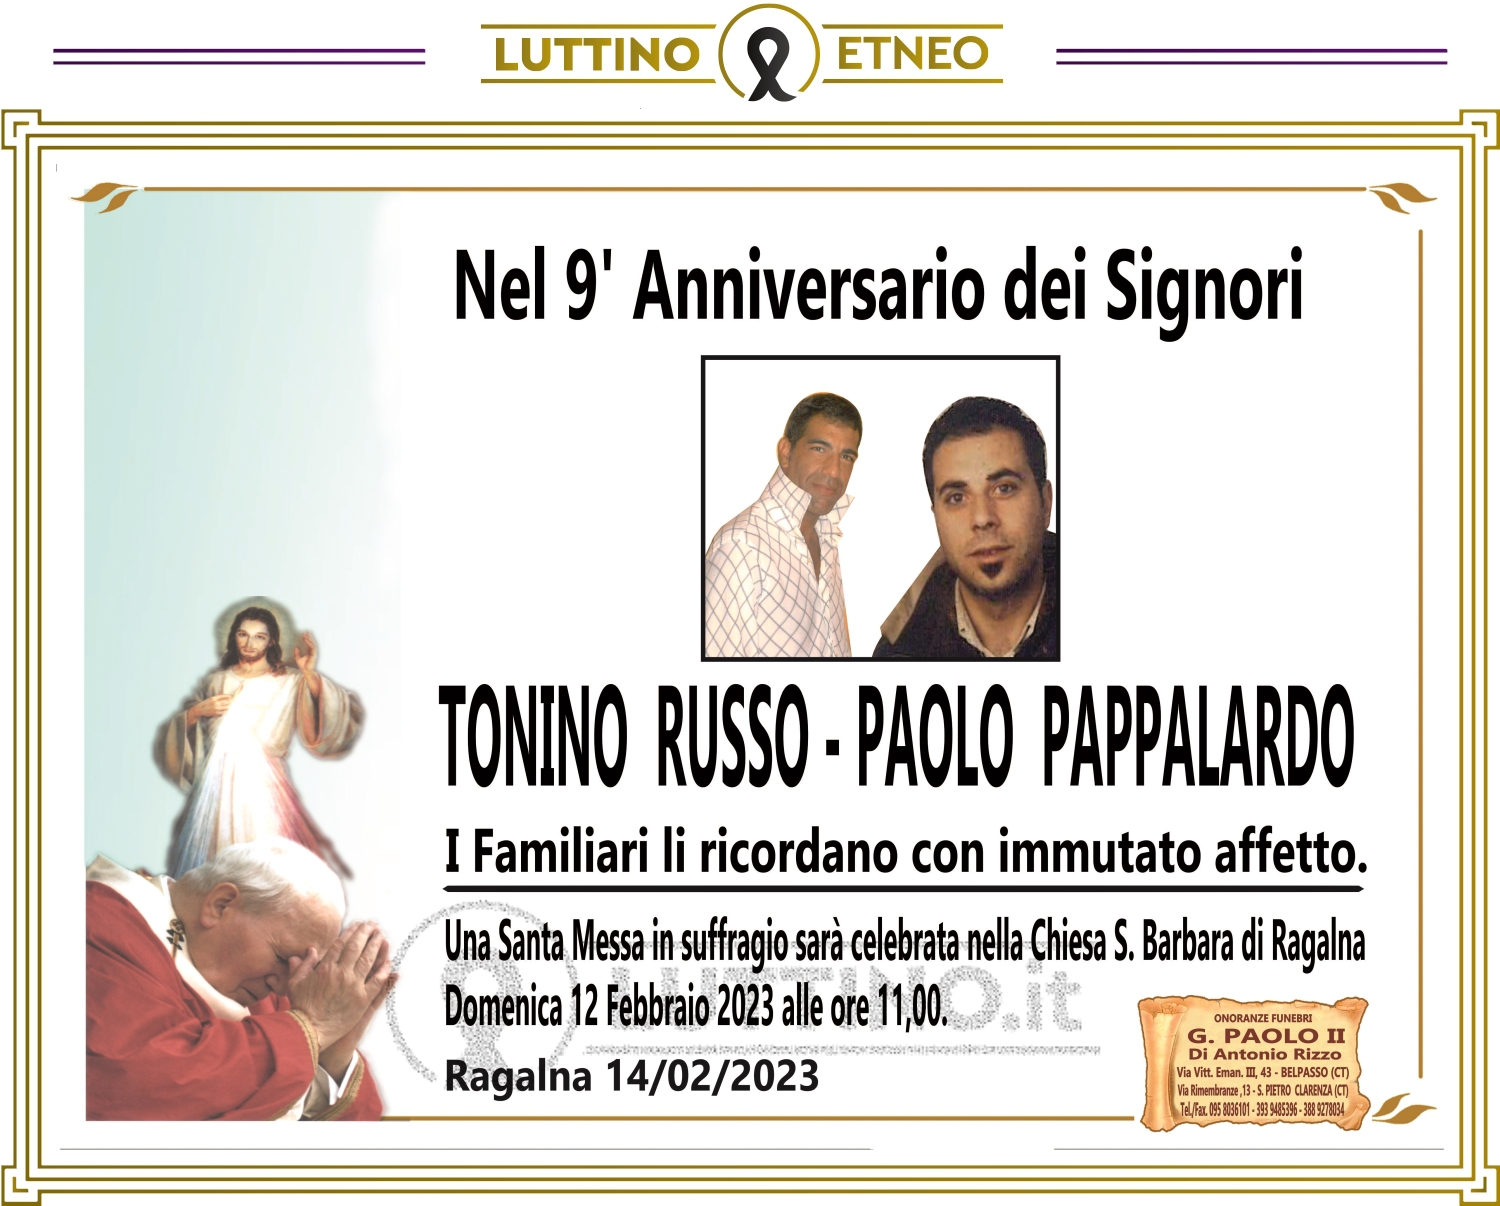 Tonino Russo Paolo Pappalardo